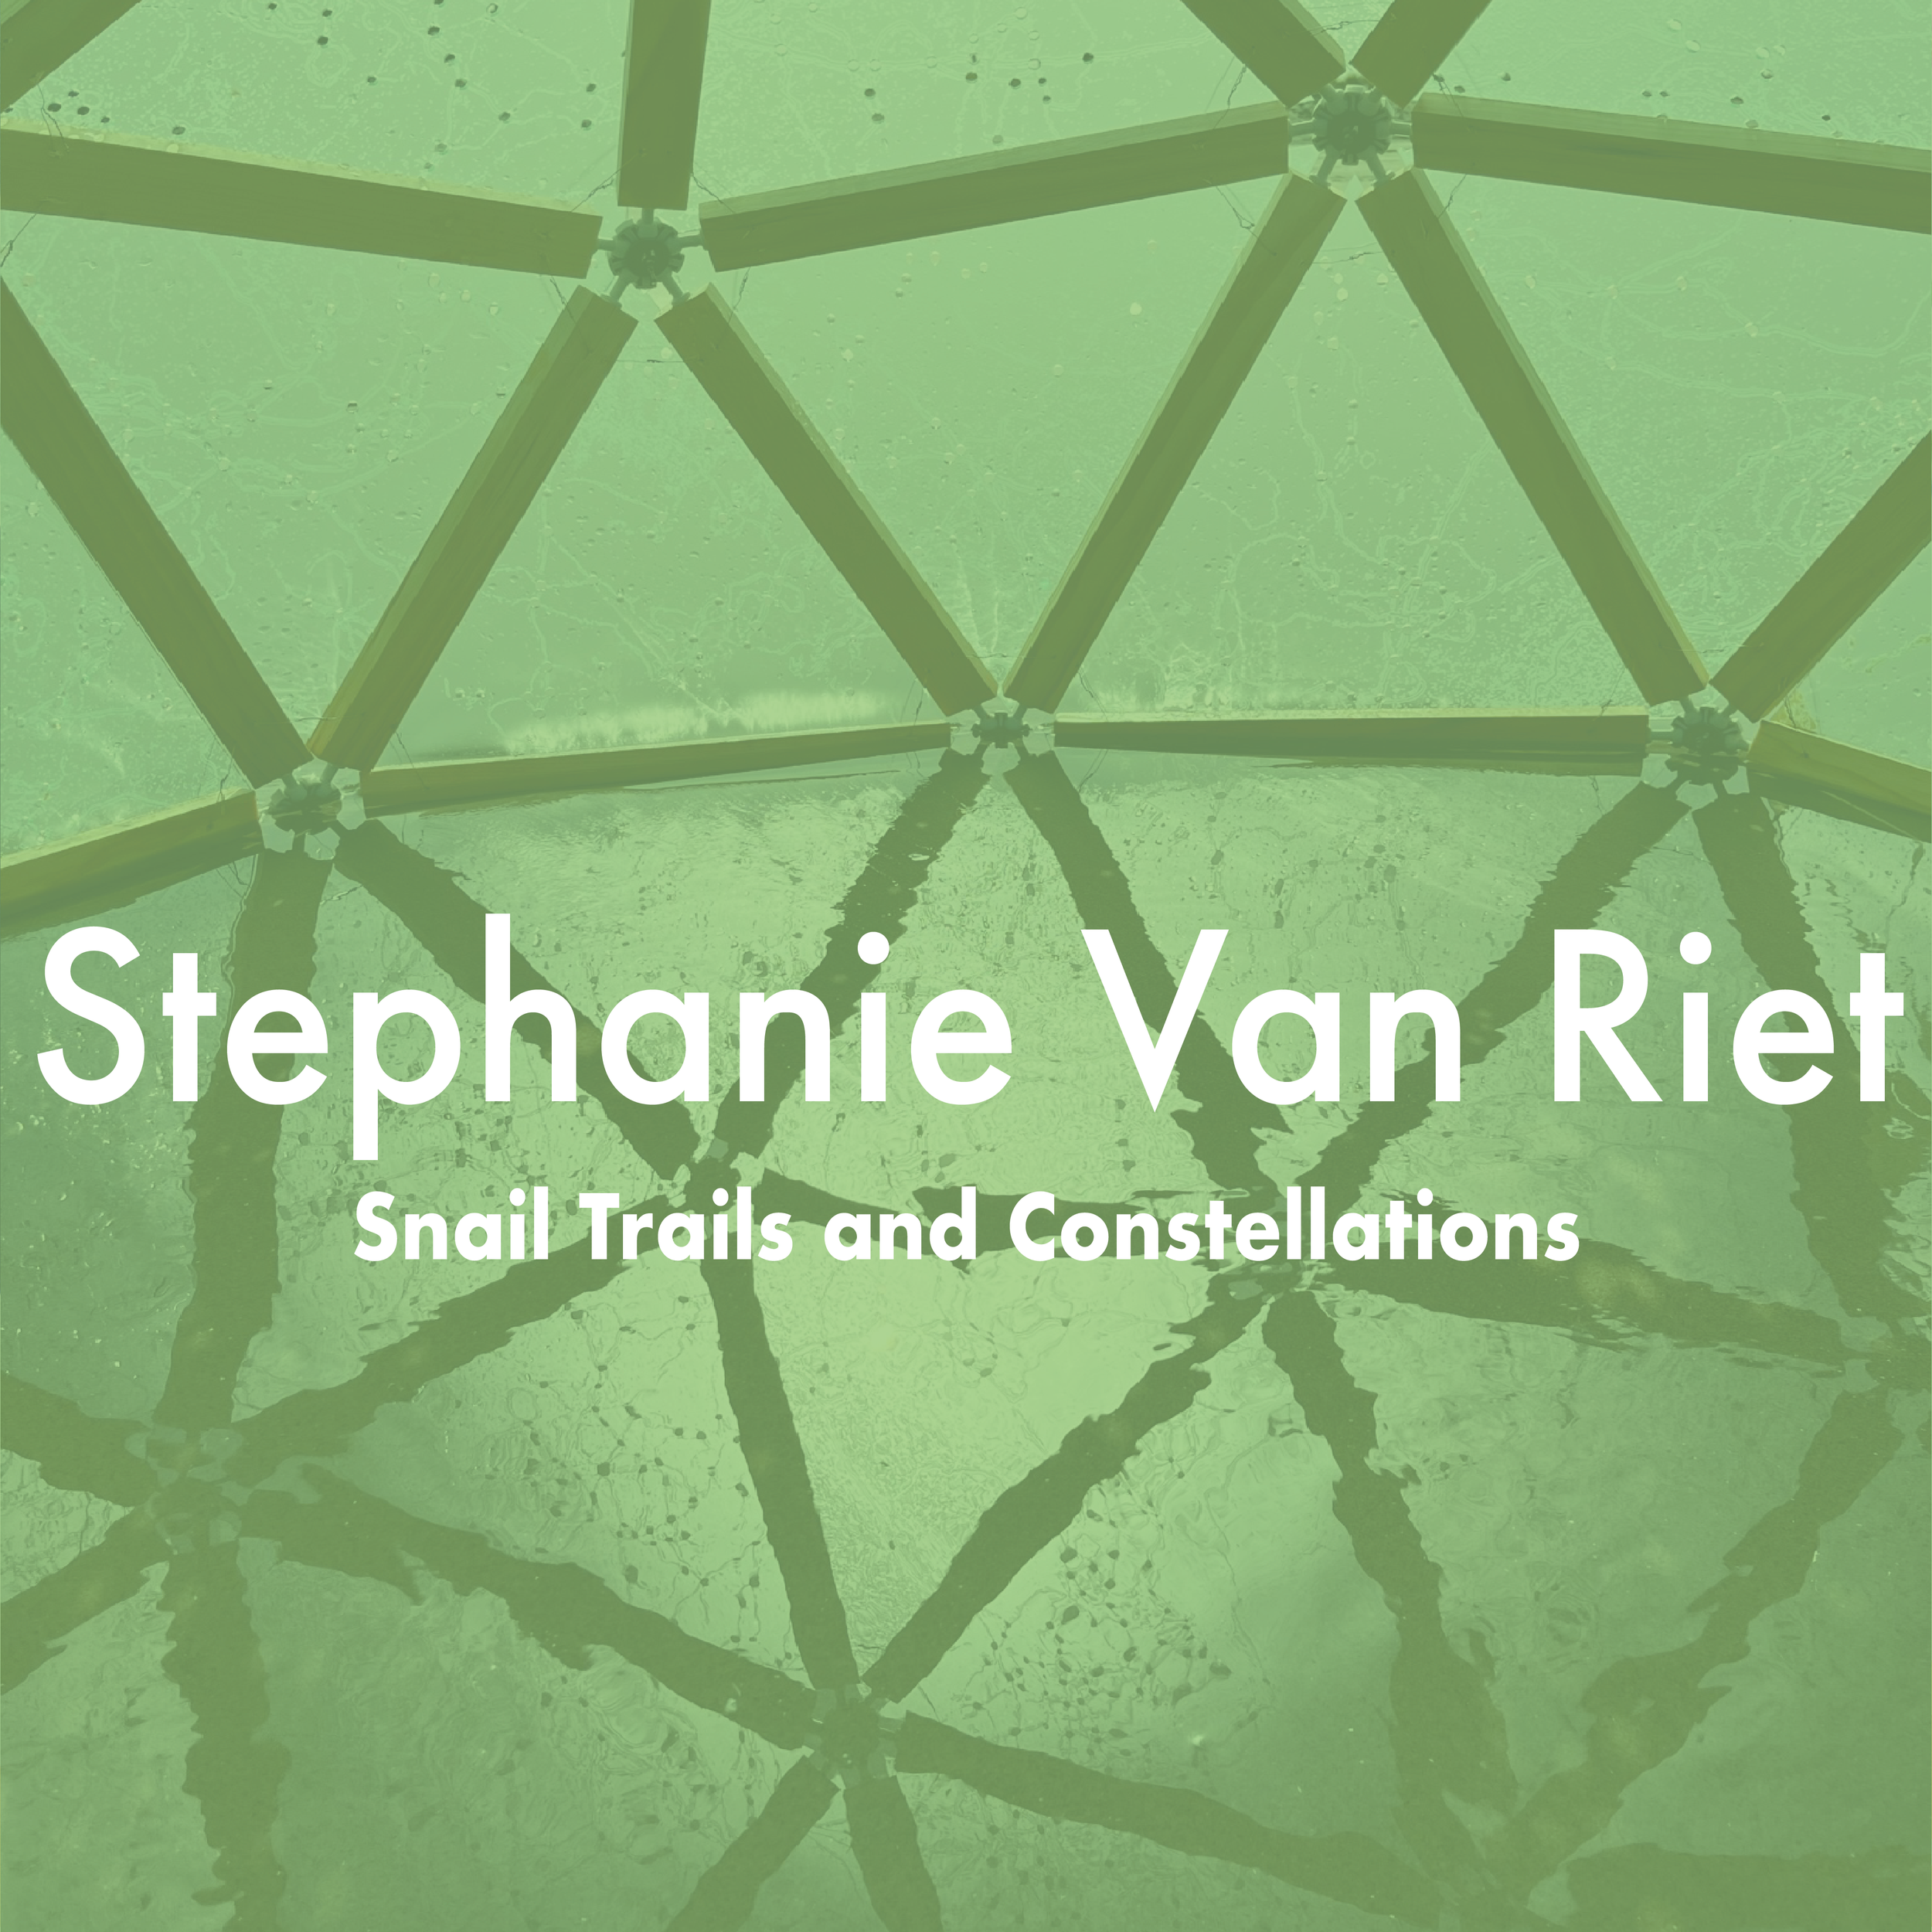 Stephanie Van Riet